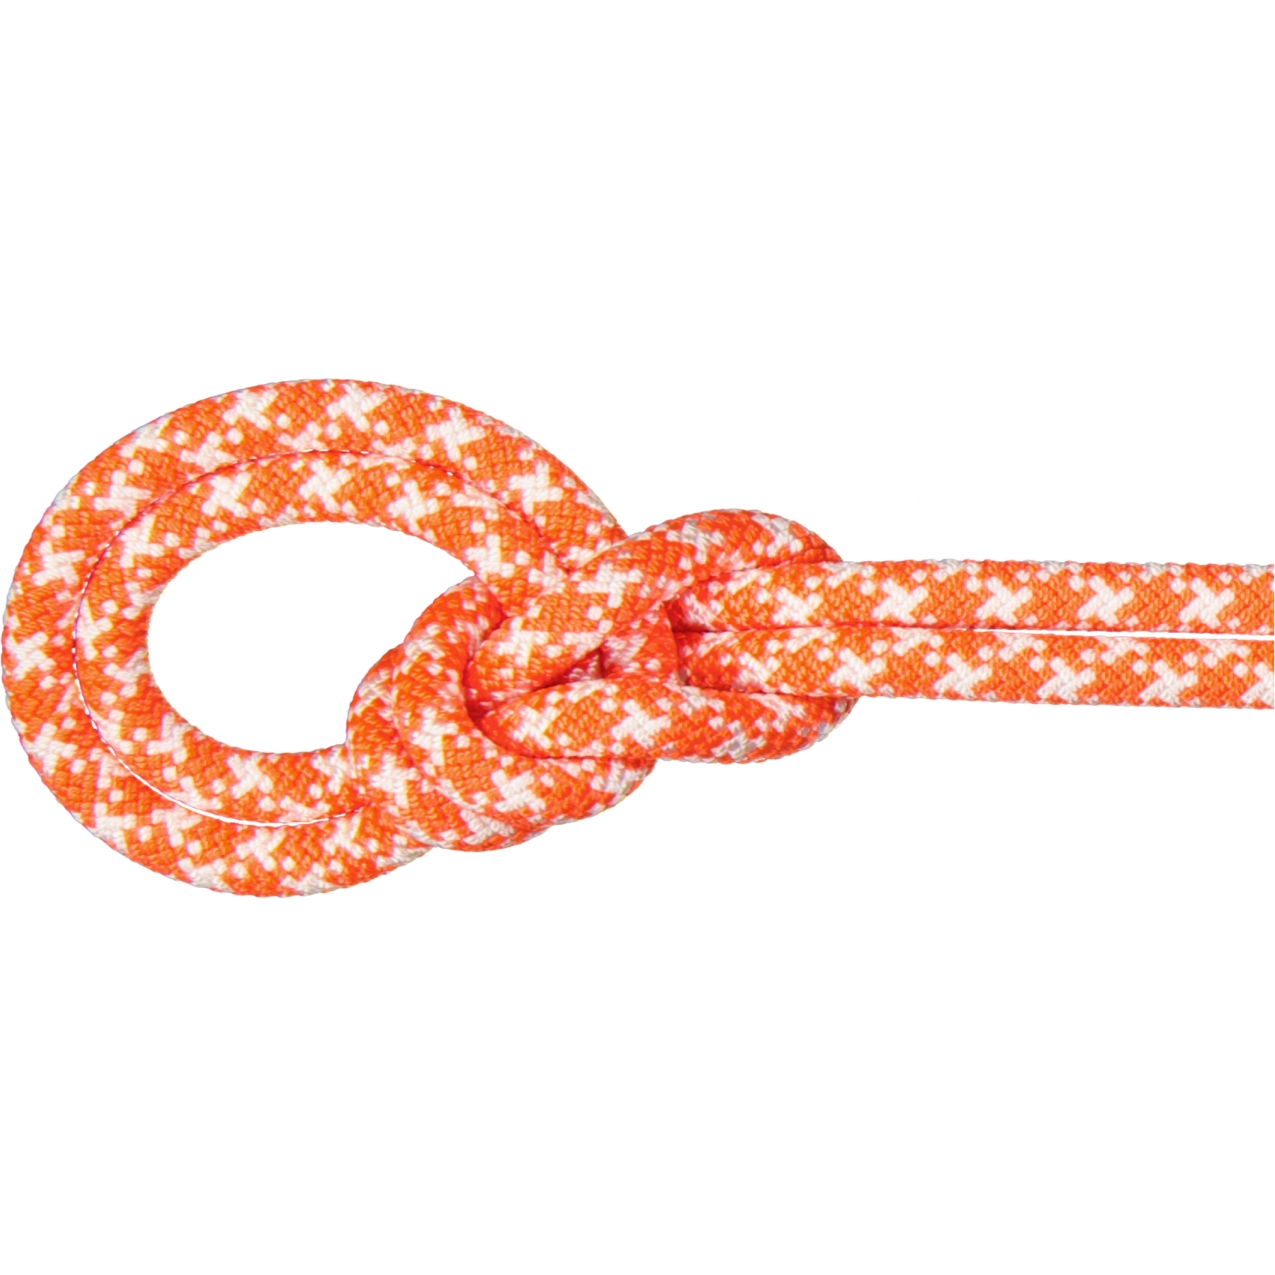 Image of Mammut 9.5 Crag Classic Rope - 70m - vibrant orange-white